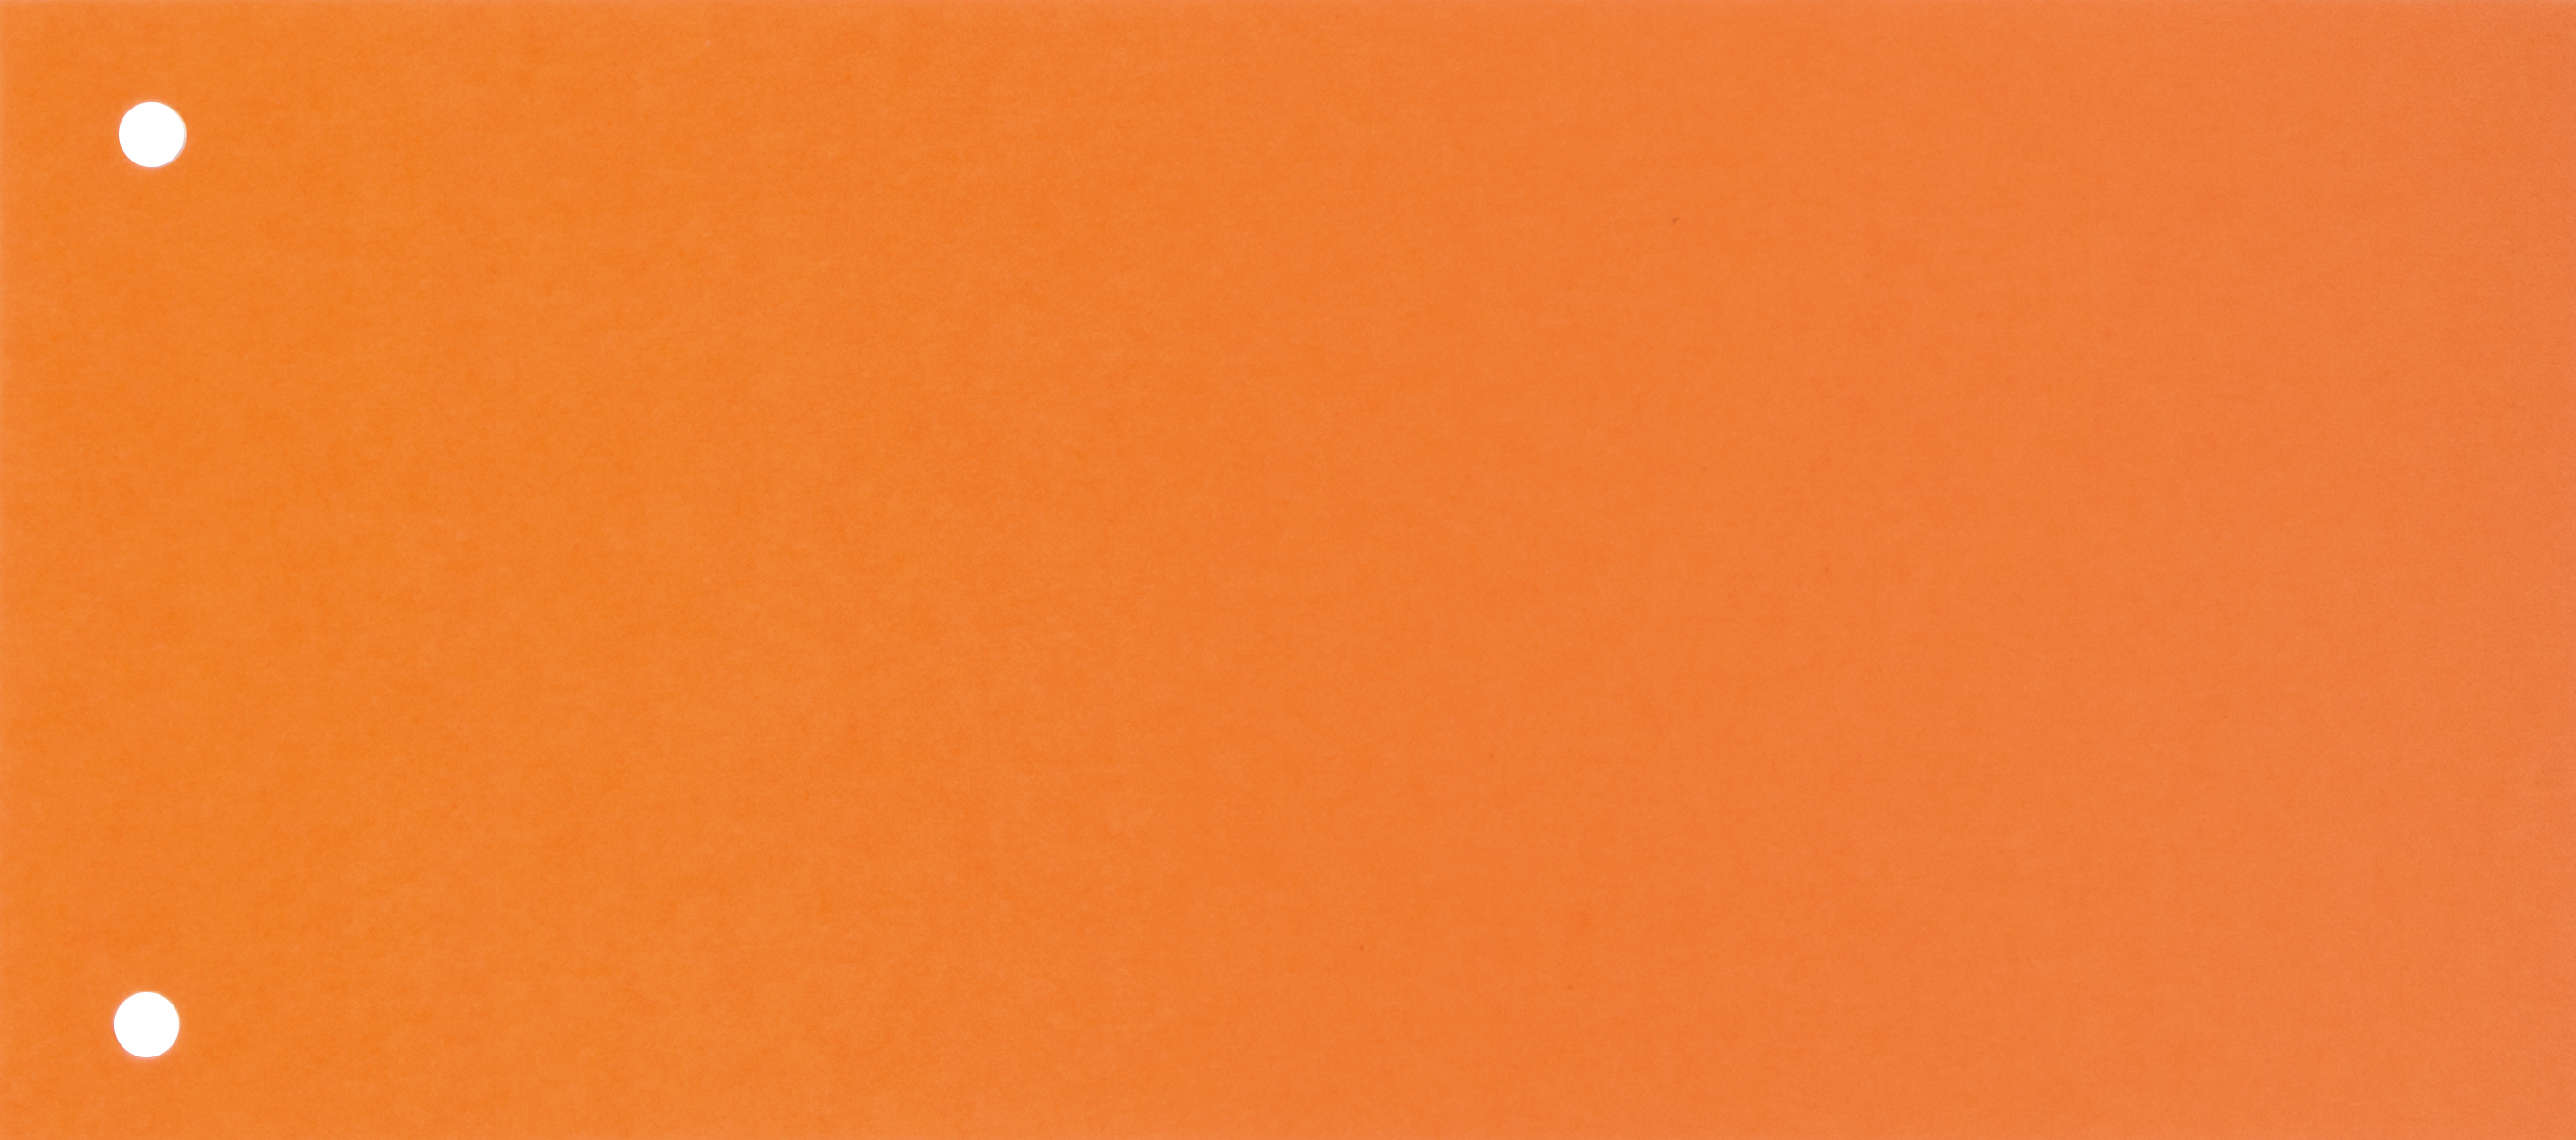 BIELLA Intercalaires carton 2 trous 19919035U orange, 24x10.5cm 100 pcs.